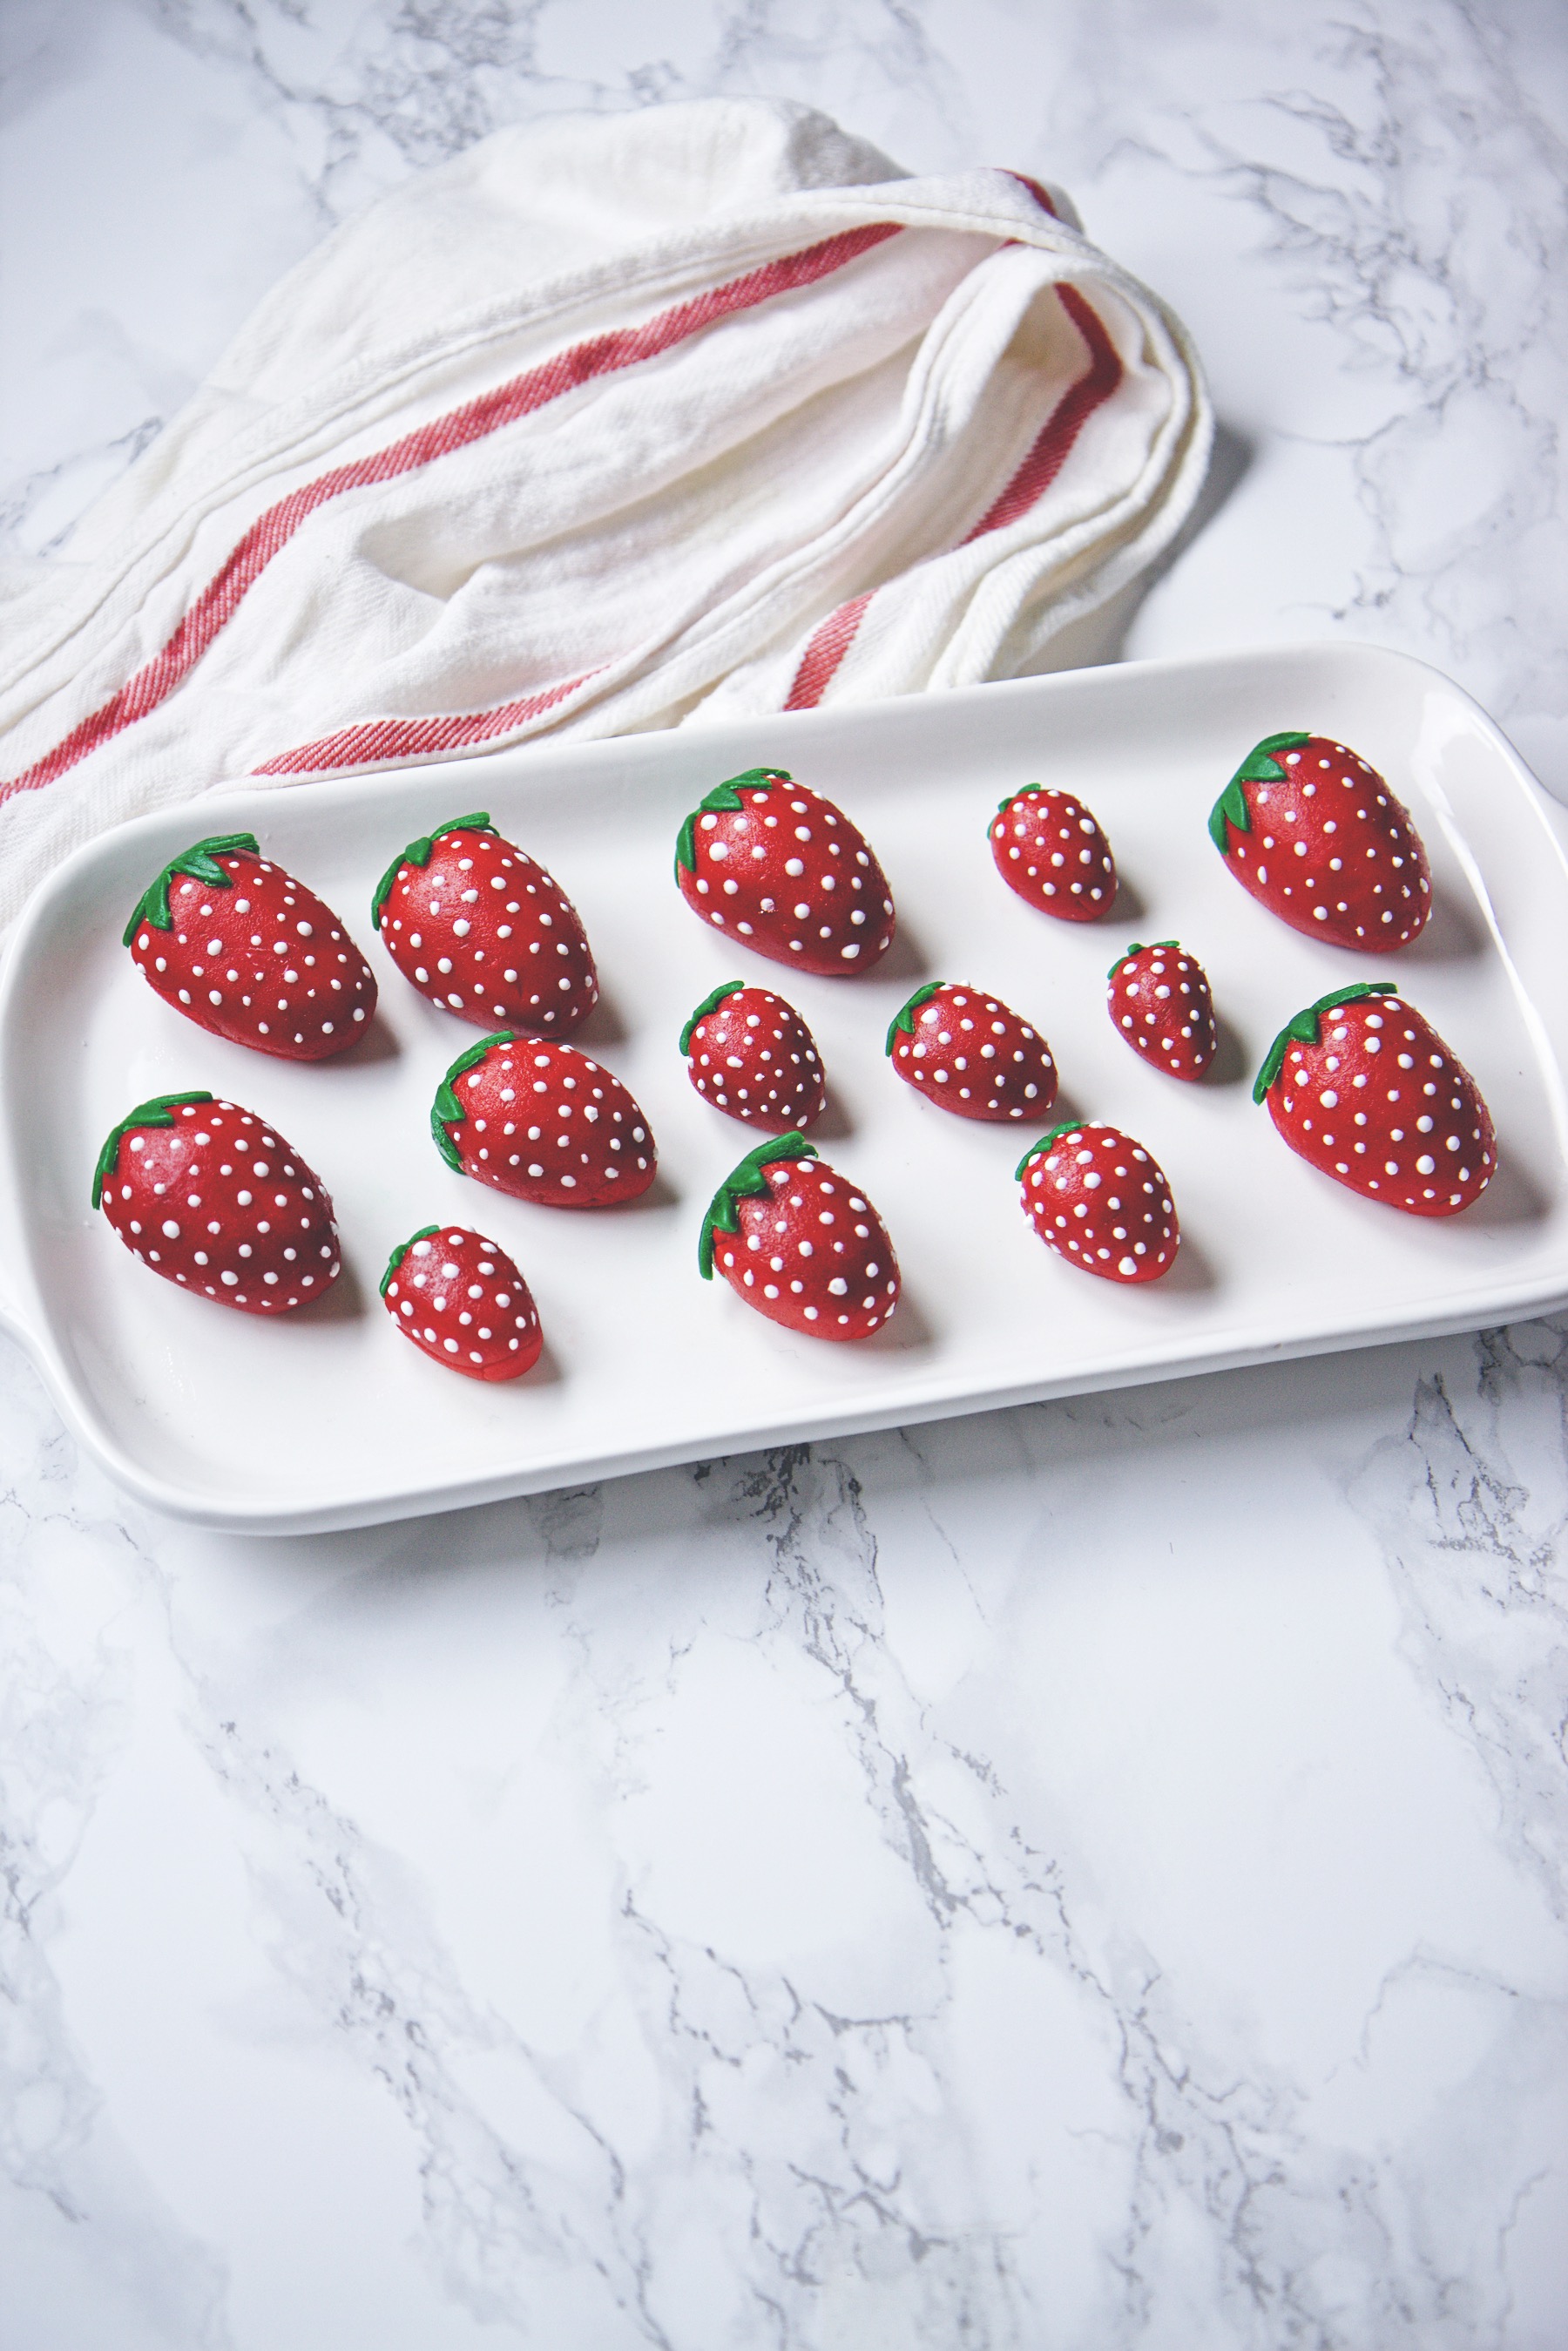 Strawberry, Chocolate, and Marzipan Cakes | La Pêche Fraîche